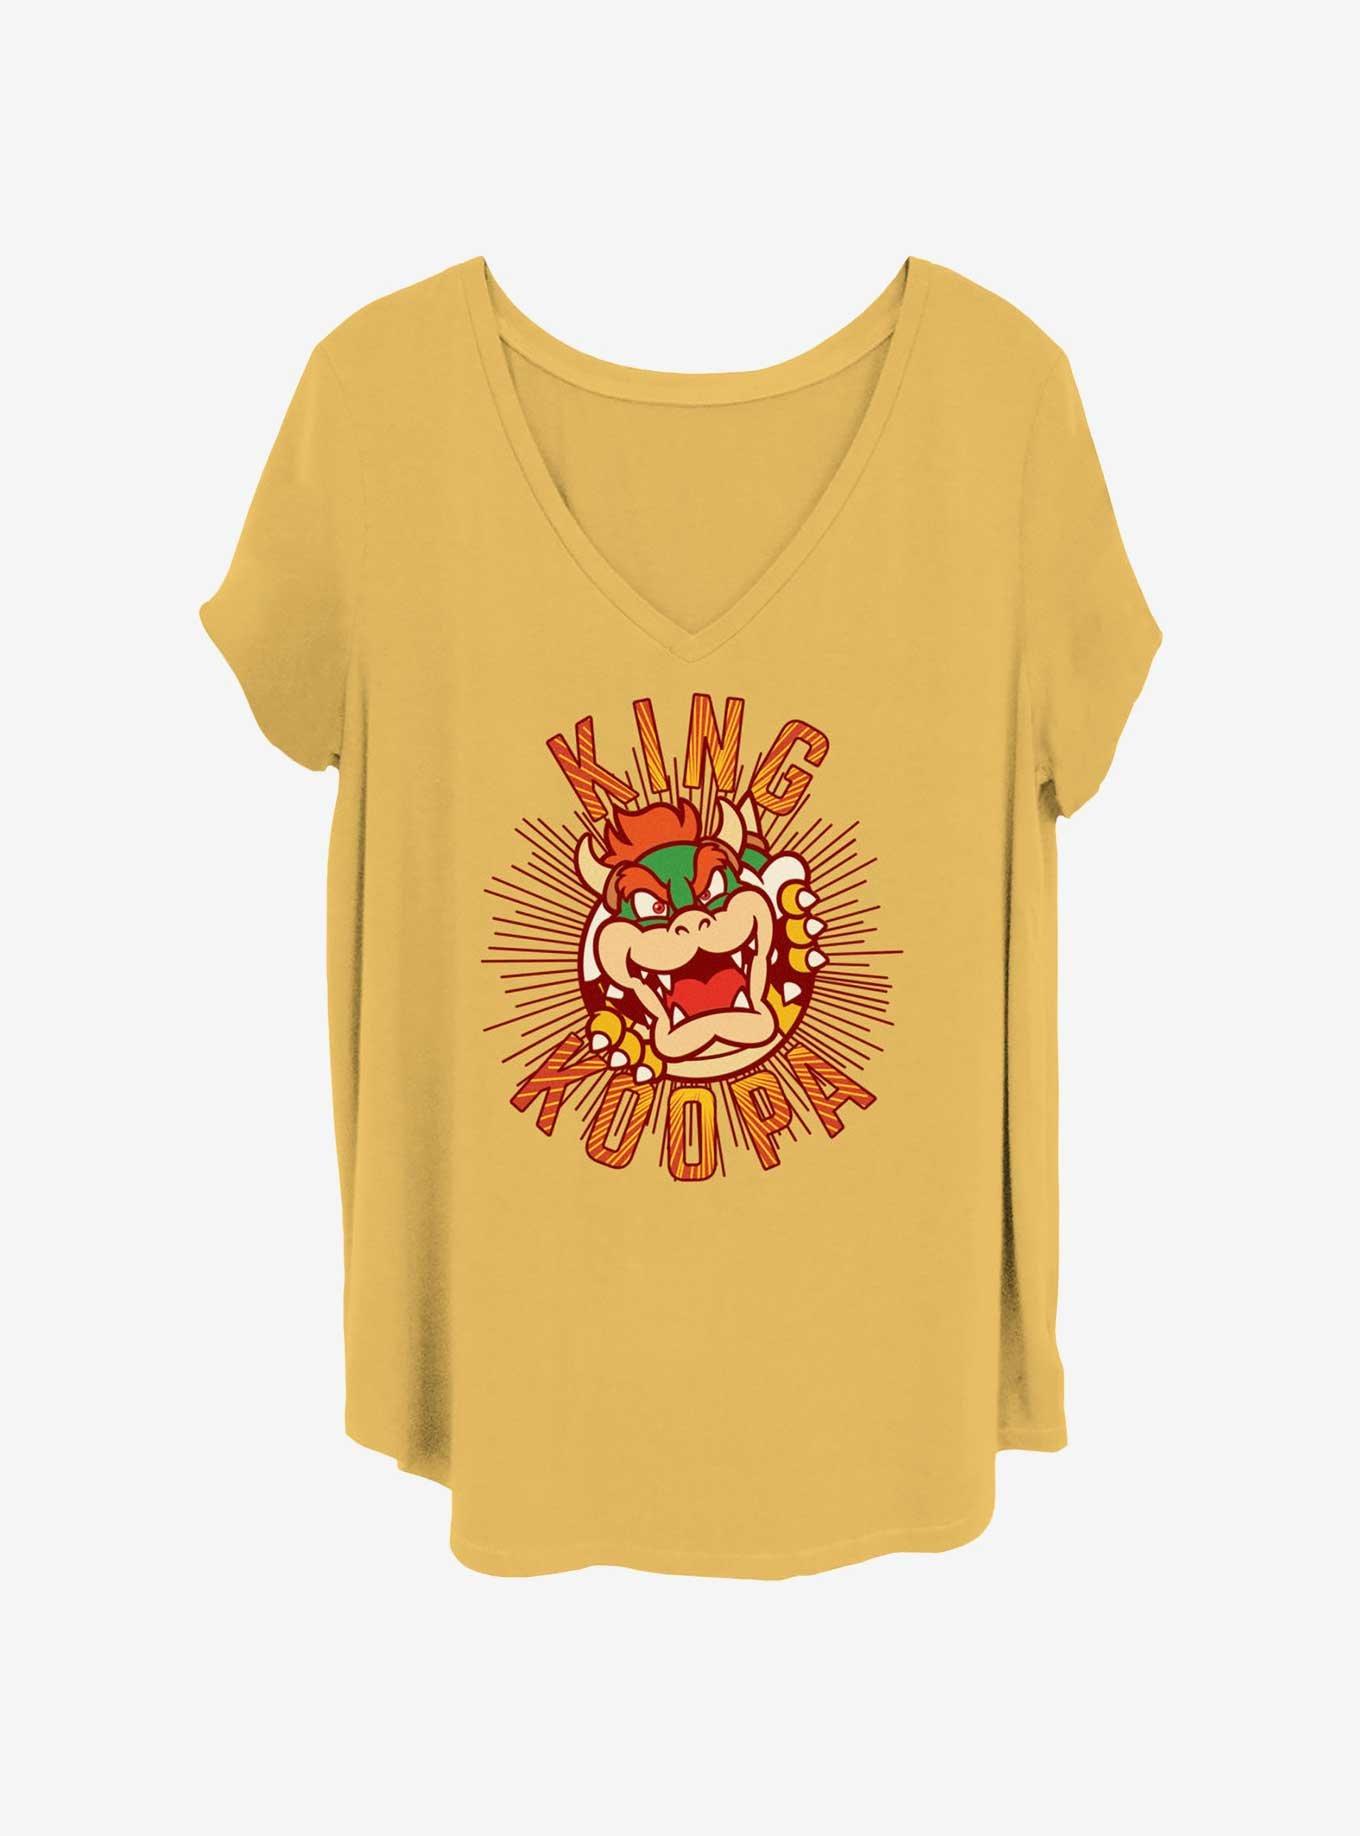 Nintendo King Koopa Girls T-Shirt Plus